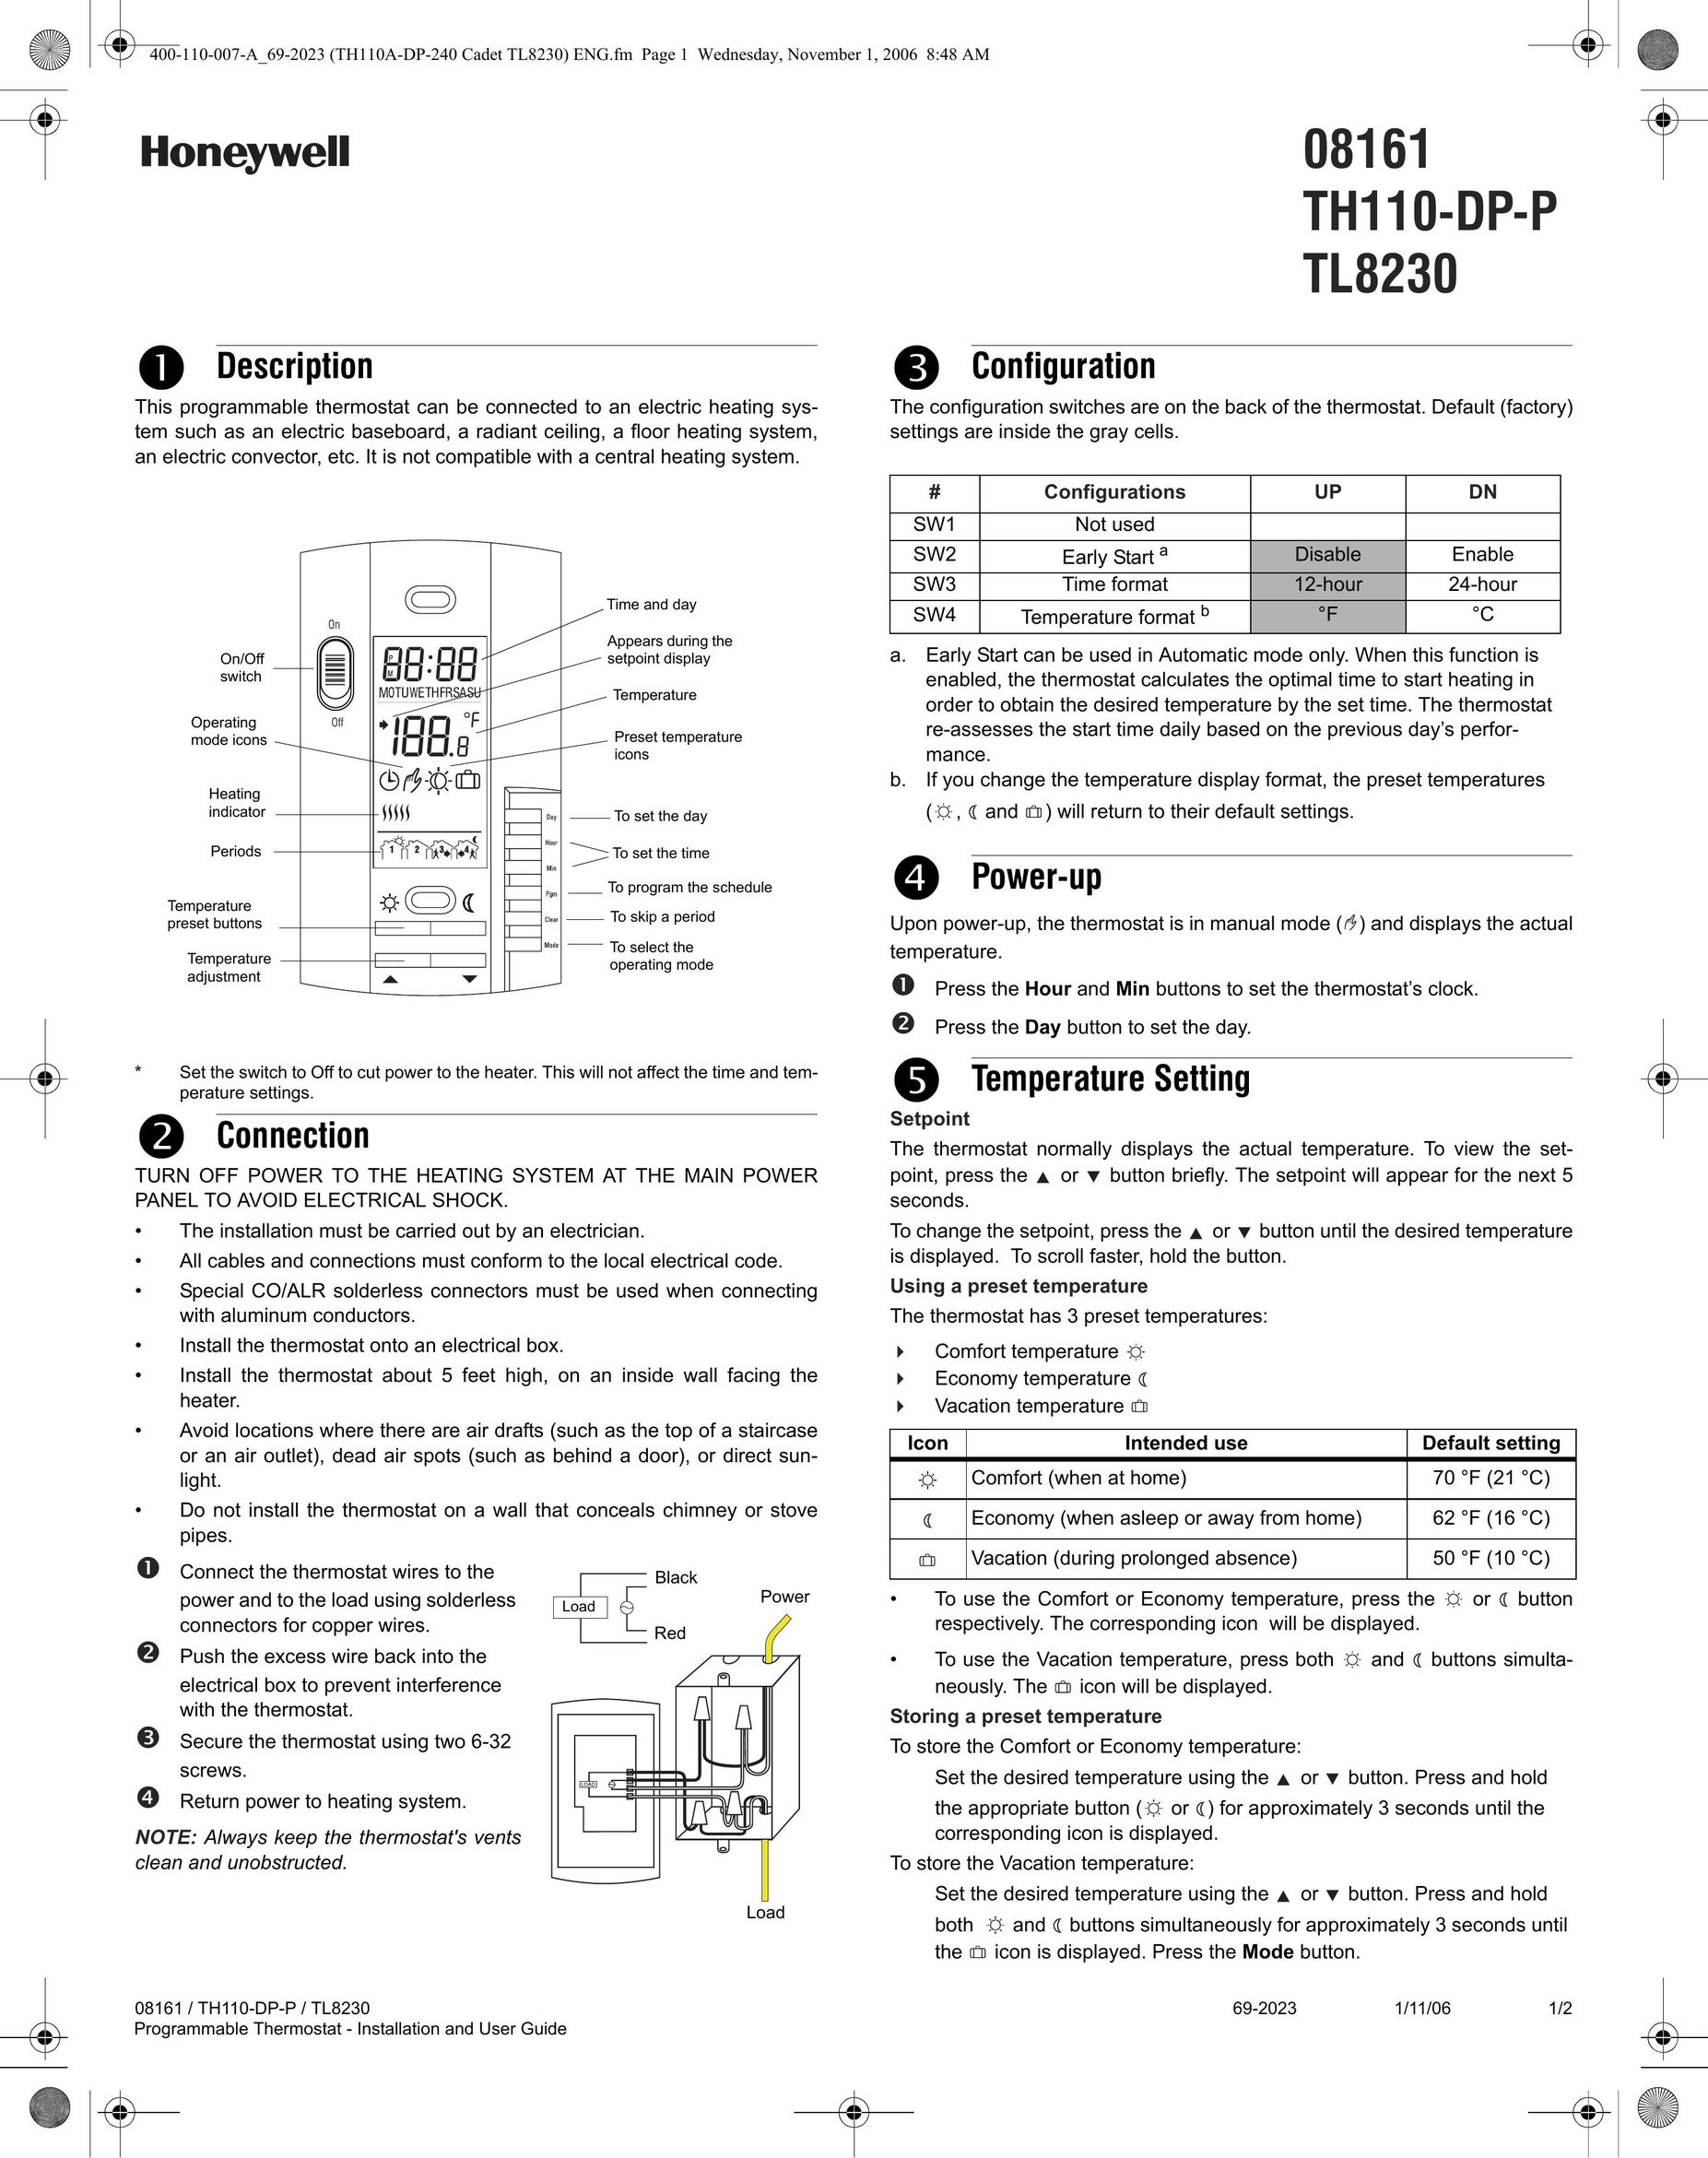 Honeywell TL8230 Personal Computer User Manual